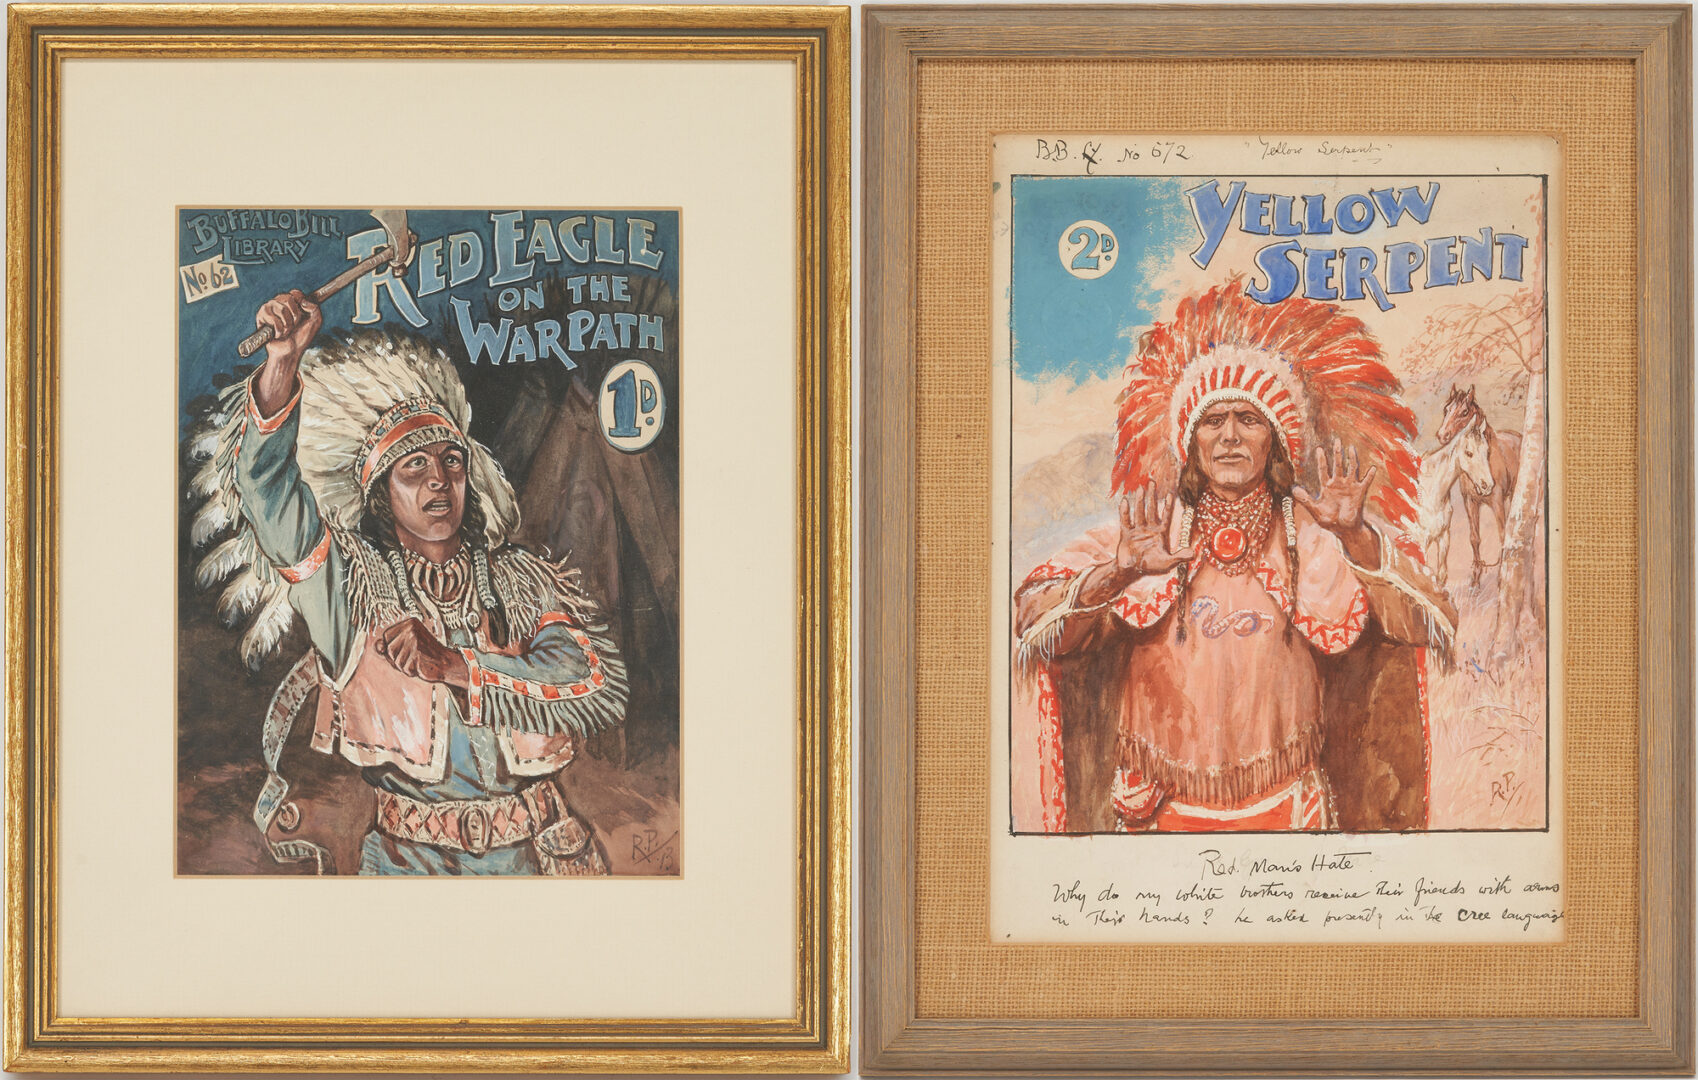 Lot 581: 2 Robert Prowse Buffalo Bill Cover Art Novel Illustrations